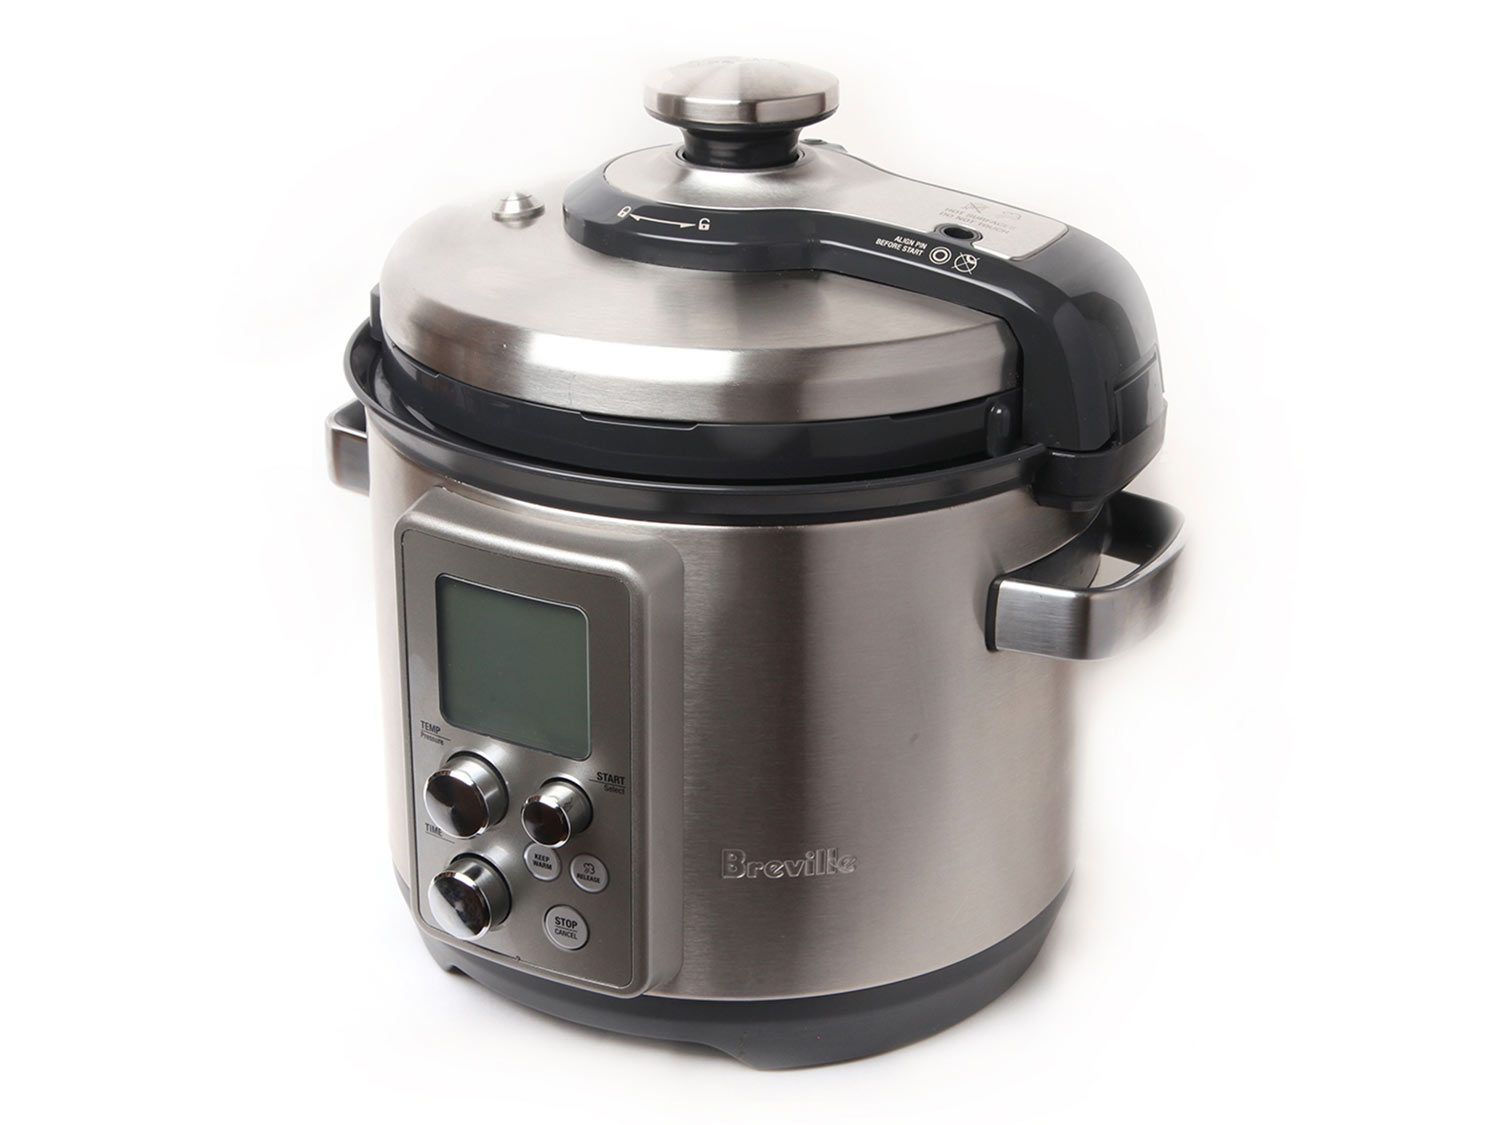 Breville Fast Slow Pro countertop pressure cooker